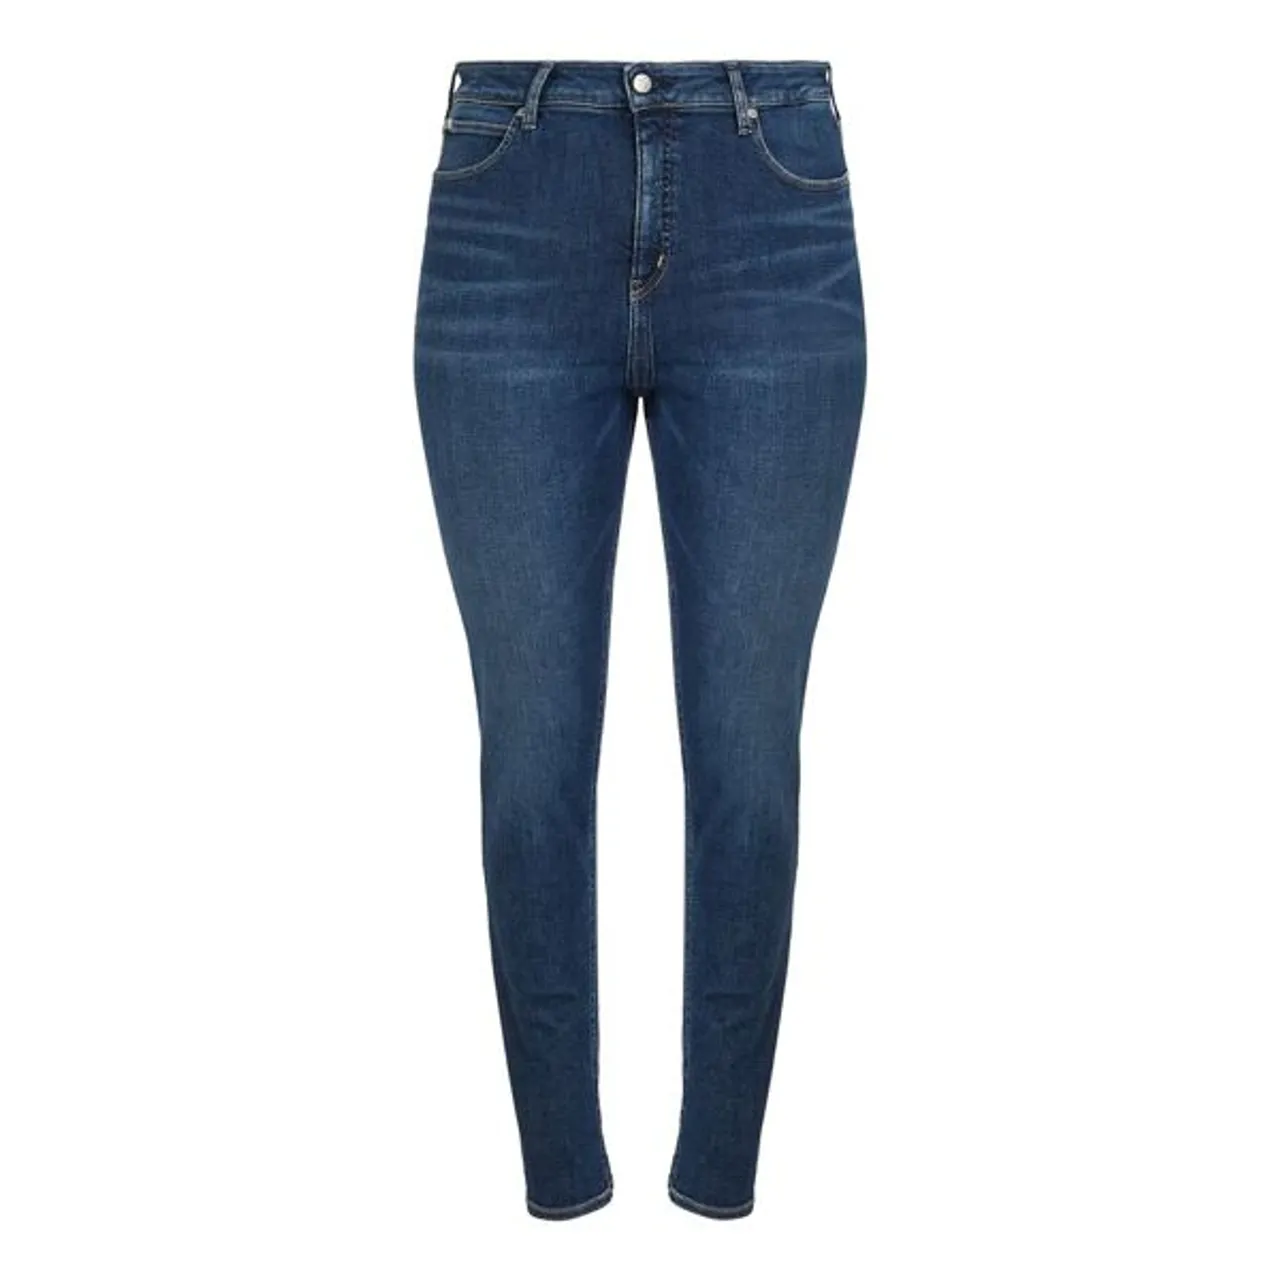 Skinny-fit-Jeans CALVIN KLEIN JEANS PLUS "HIGH RISE SKINNY PLUS" Gr. 38, N-Gr, blau (denim dark) Damen Jeans Röhrenjeans